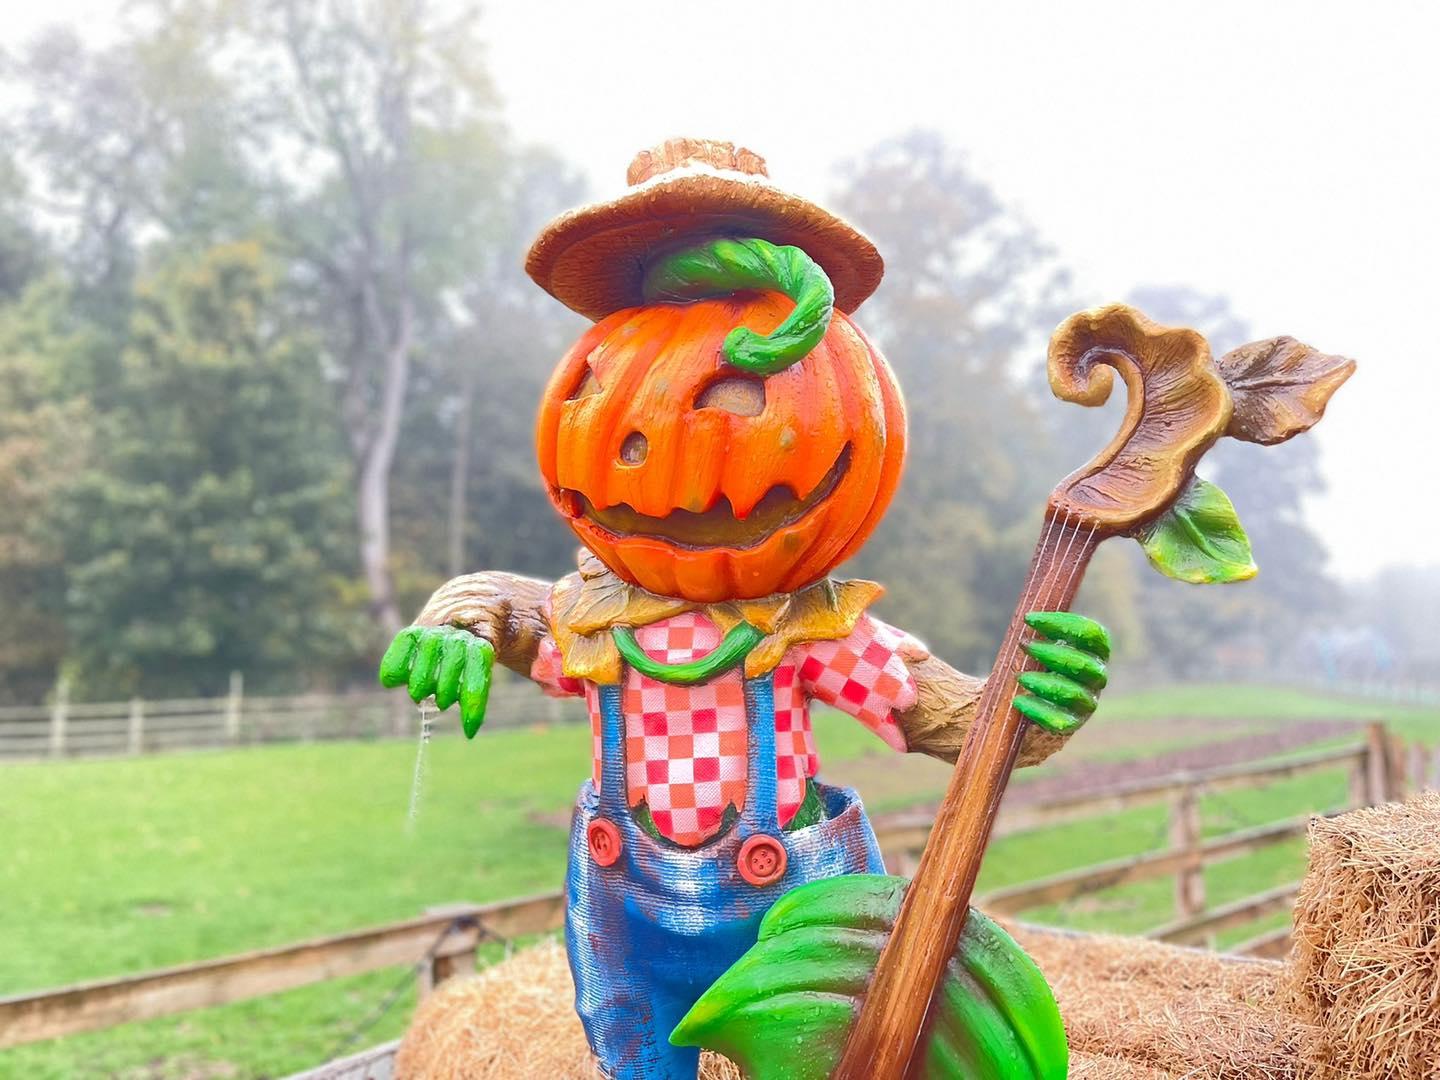 pumpkin character at stockeld park, yorkshire